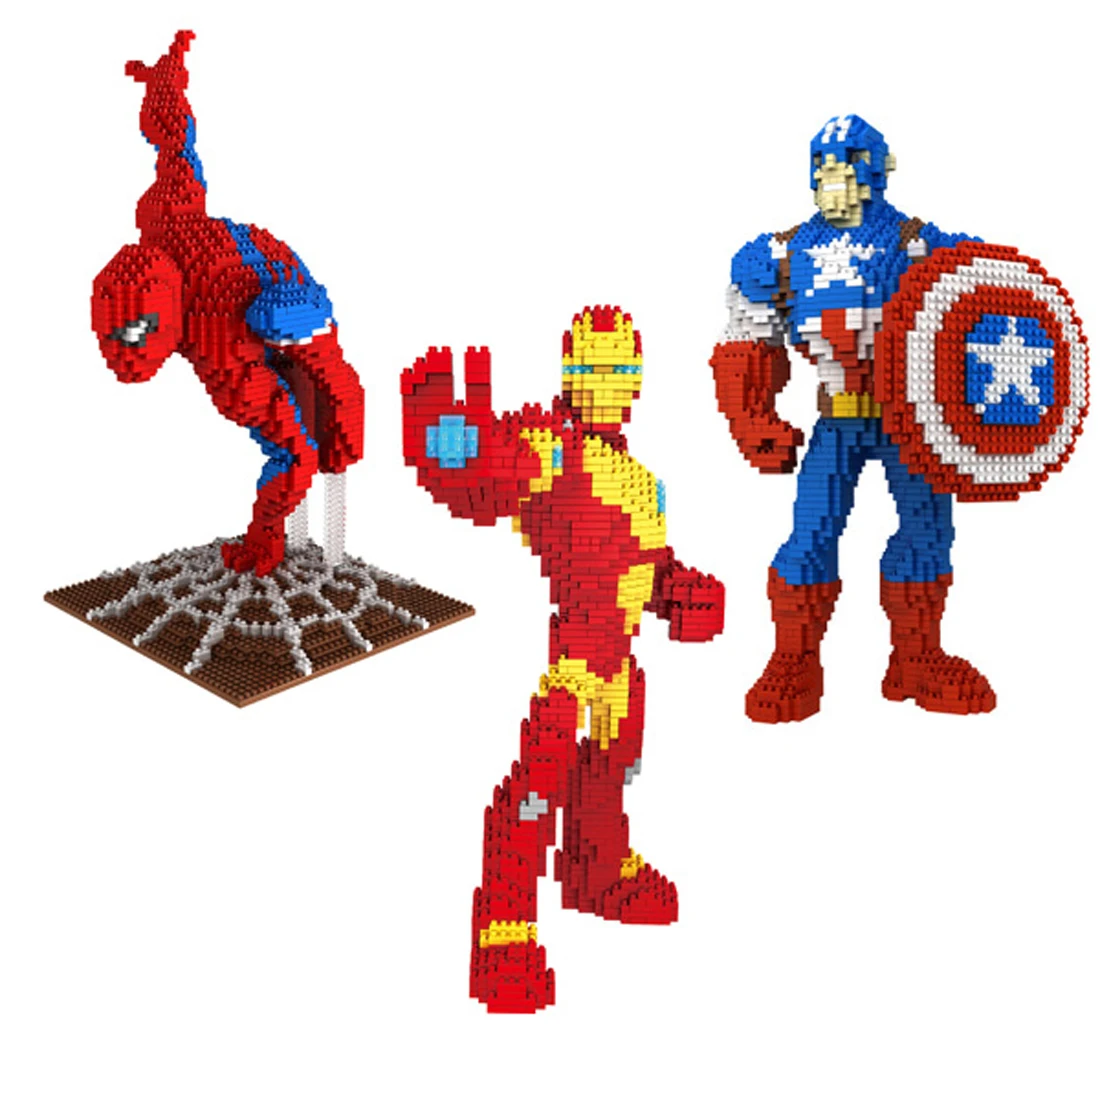 

hot marvel super hero avengers ironman spiderman captain america figures model bricks mini micro diamond build blocks toys gift